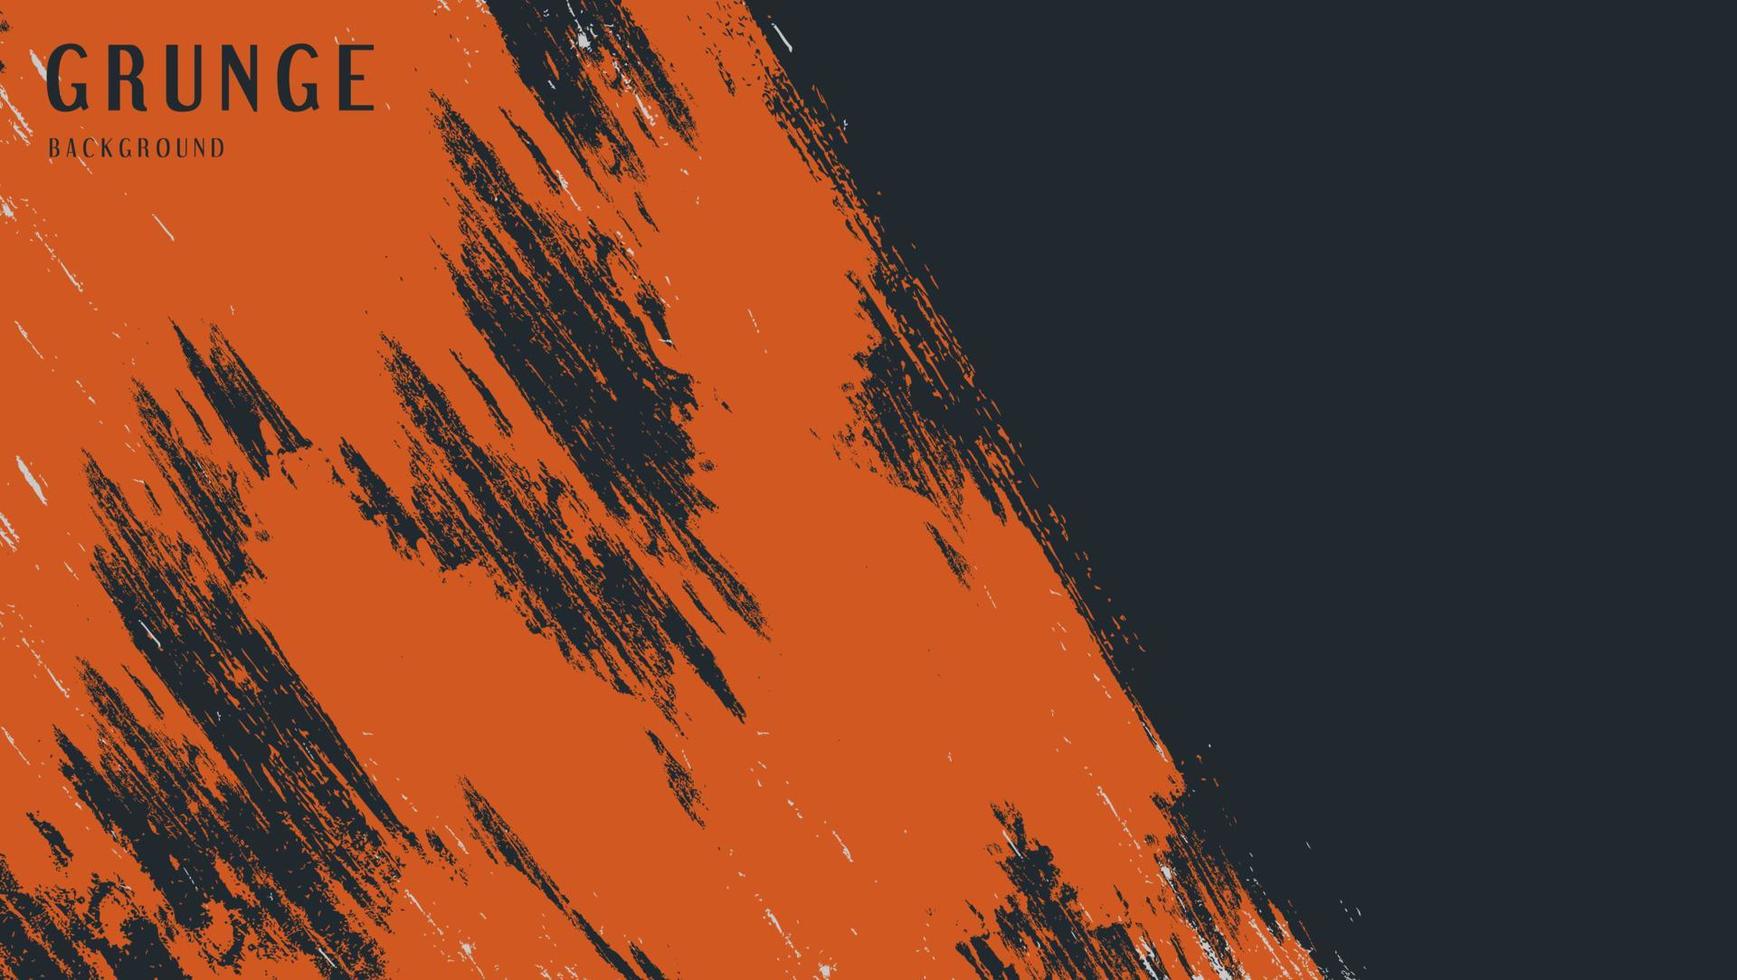 design de textura de risco grunge laranja abstrato mínimo em fundo escuro vetor